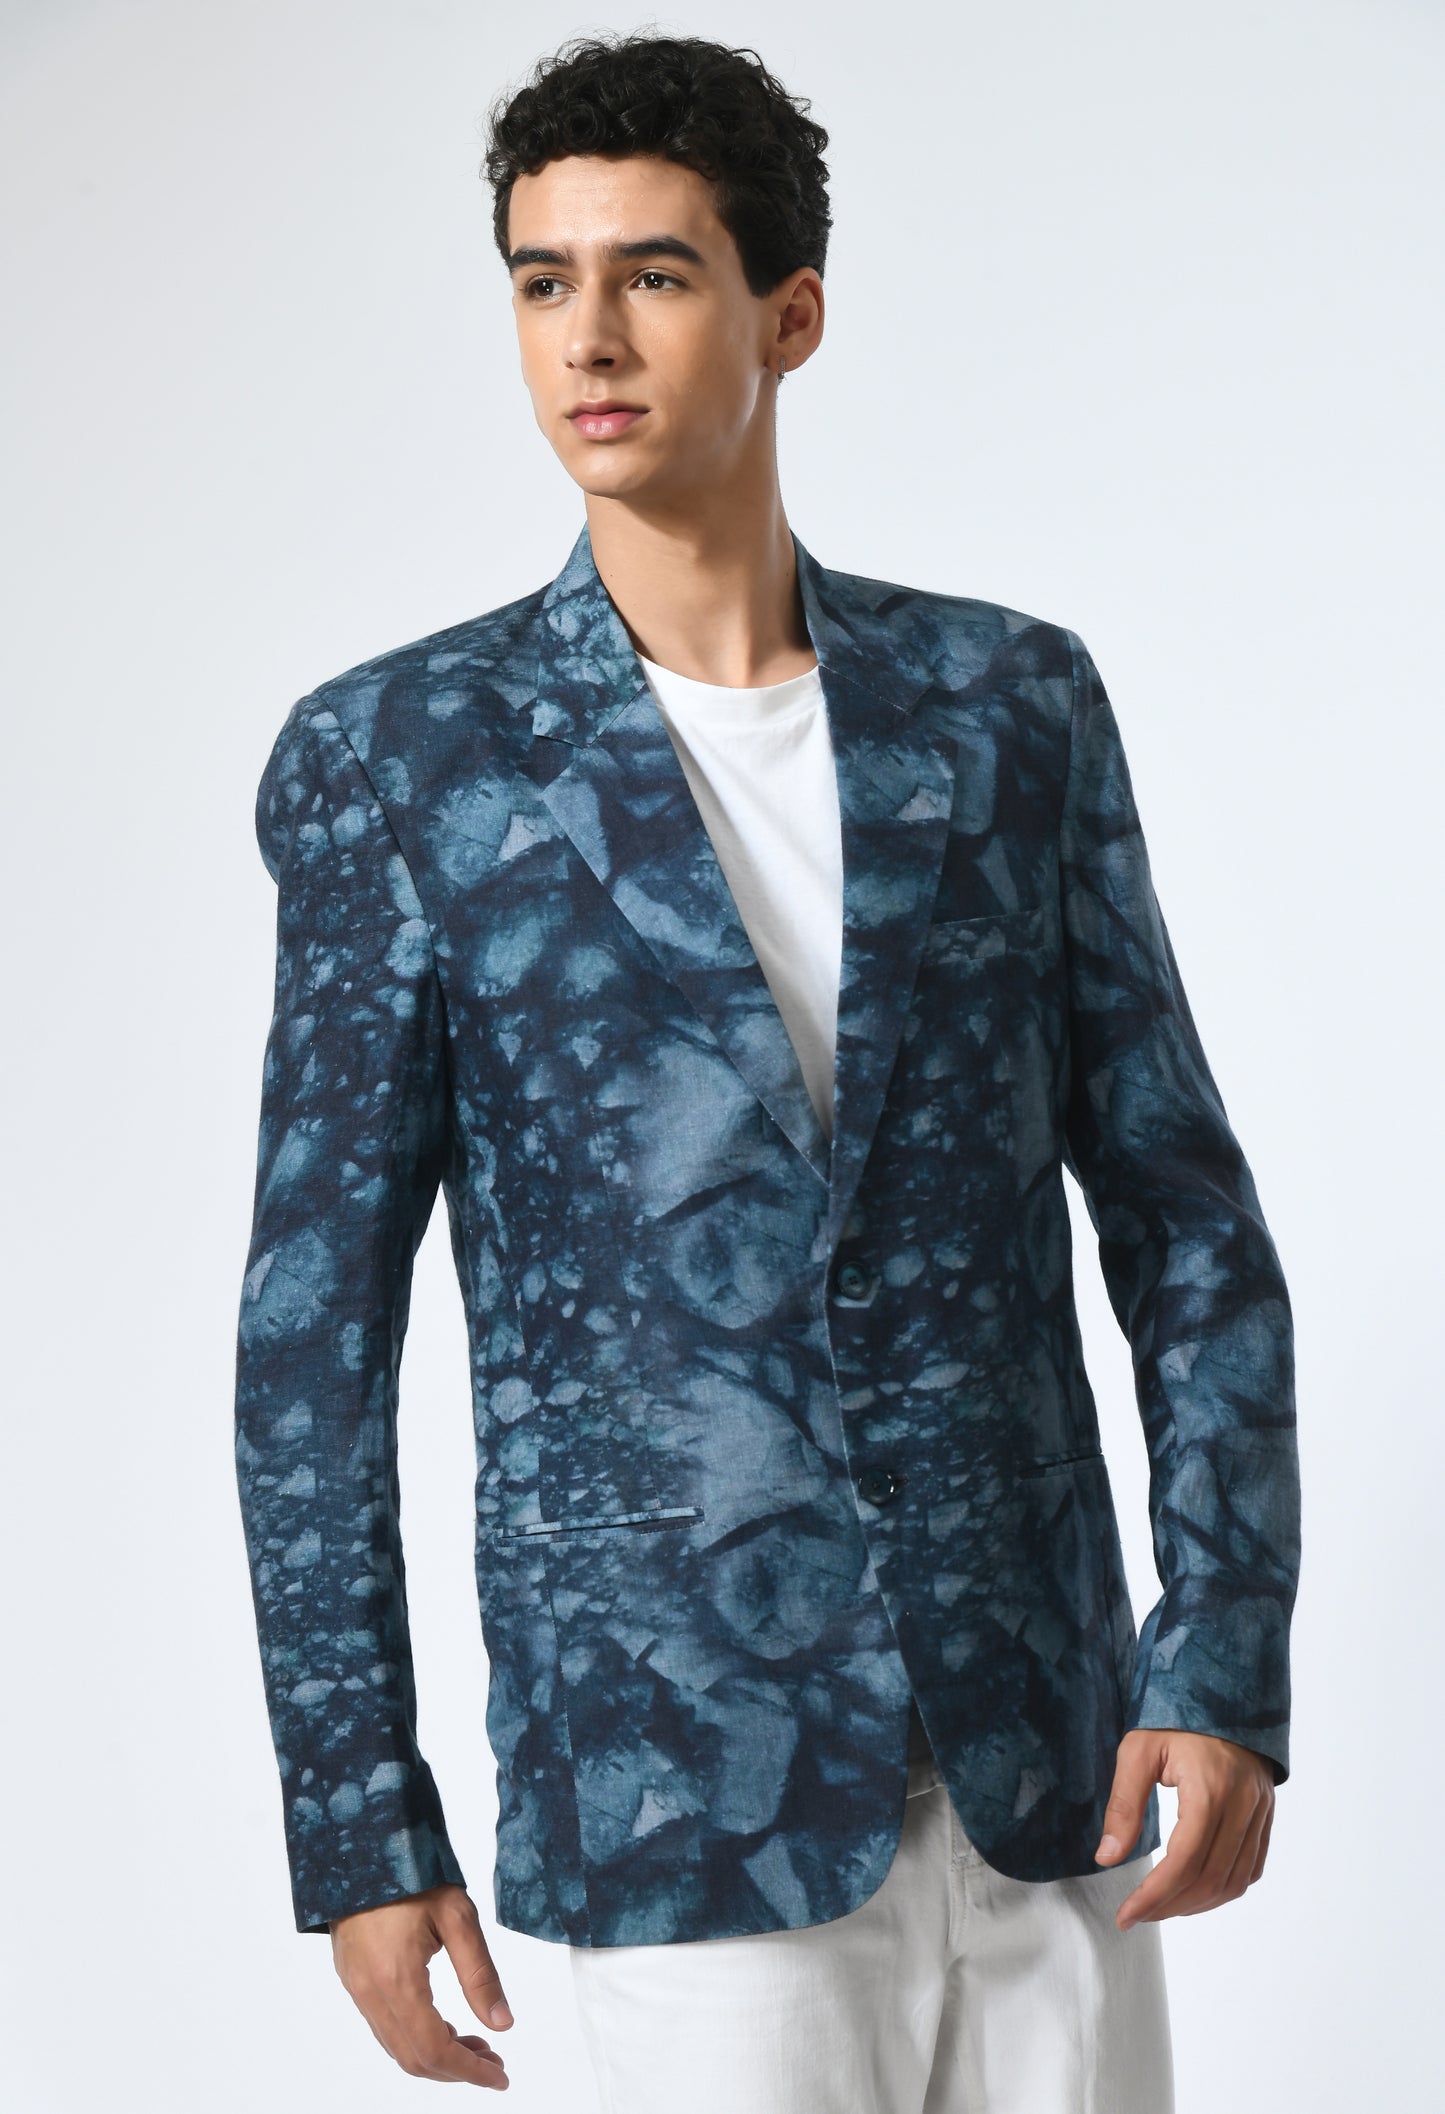 Men's regular-fit printed blazer.